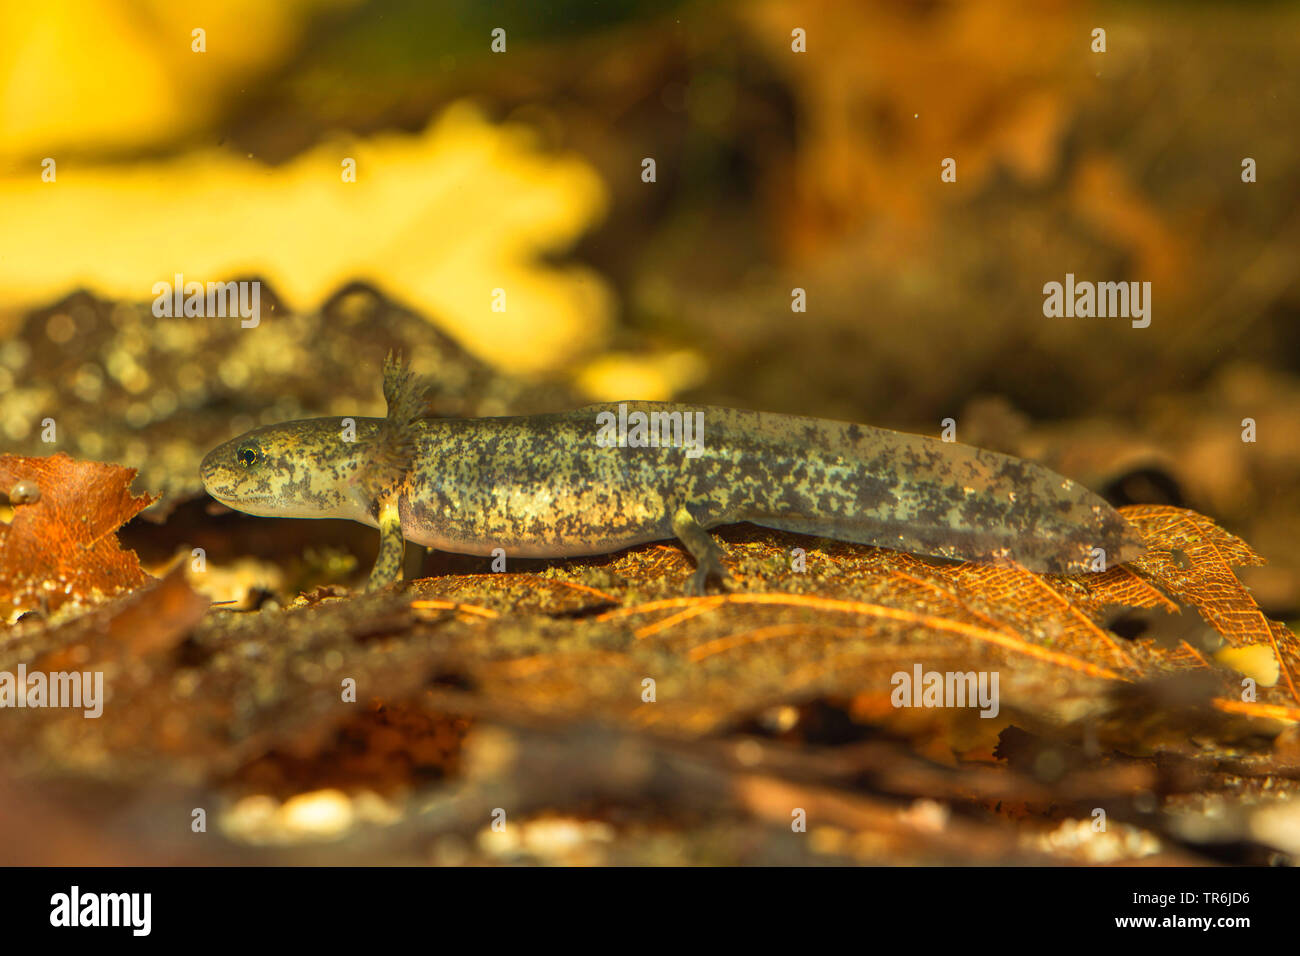 Salamandre terrestre européen (Salamandra salamandra), larve juste avant la fin de la métamorphose, Allemagne Banque D'Images